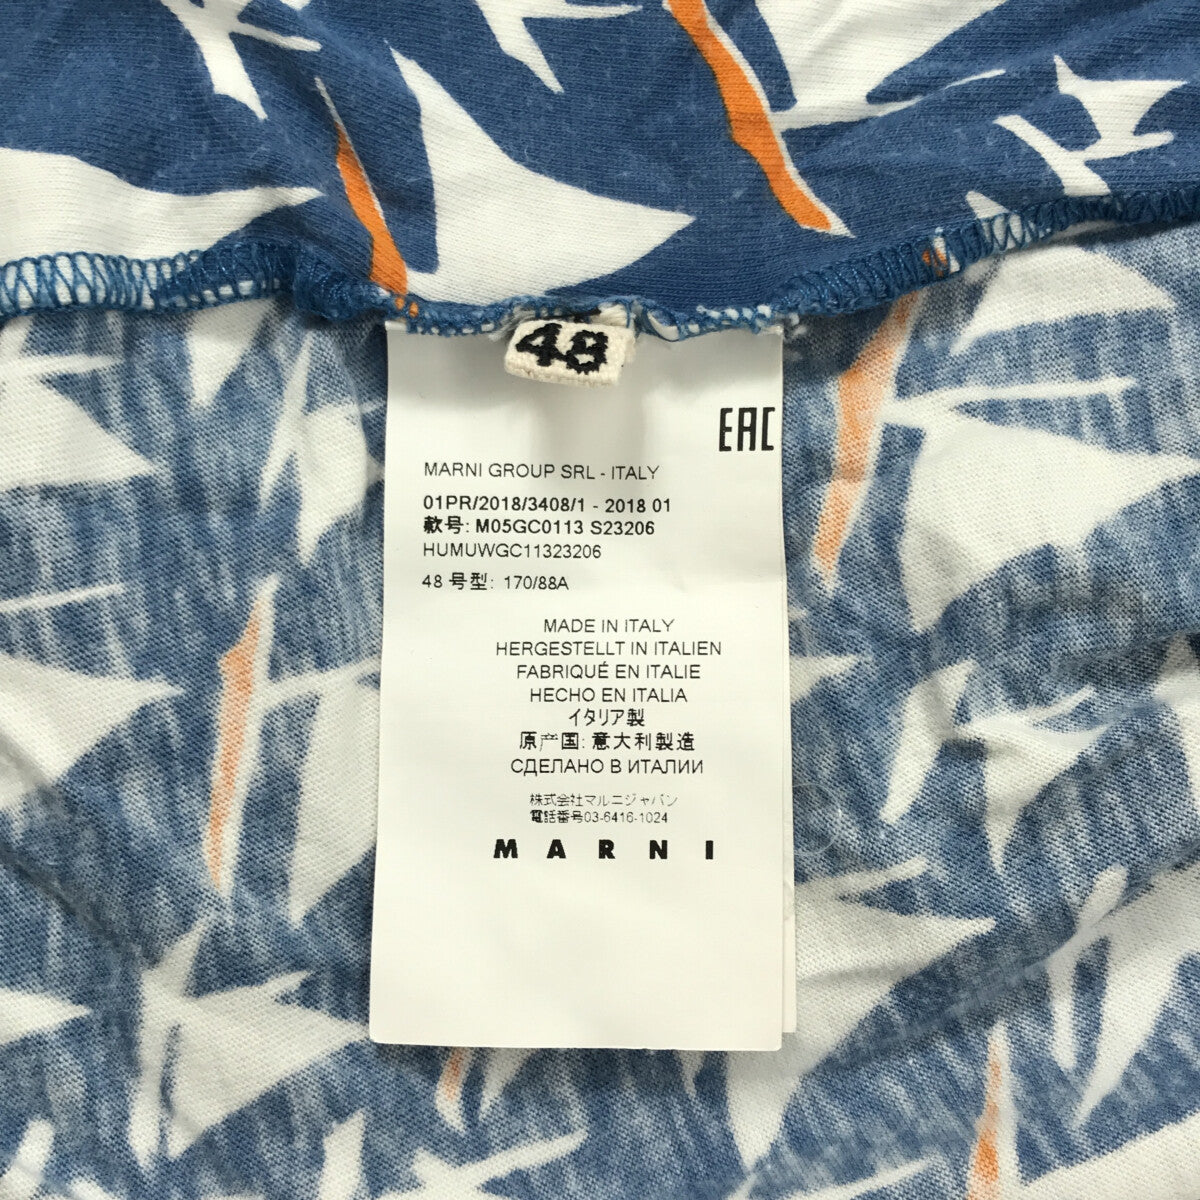 MARNI / マルニ | ヨット柄 リバースプリント 切替 Tシャツ | 48 | ブルー | メンズ